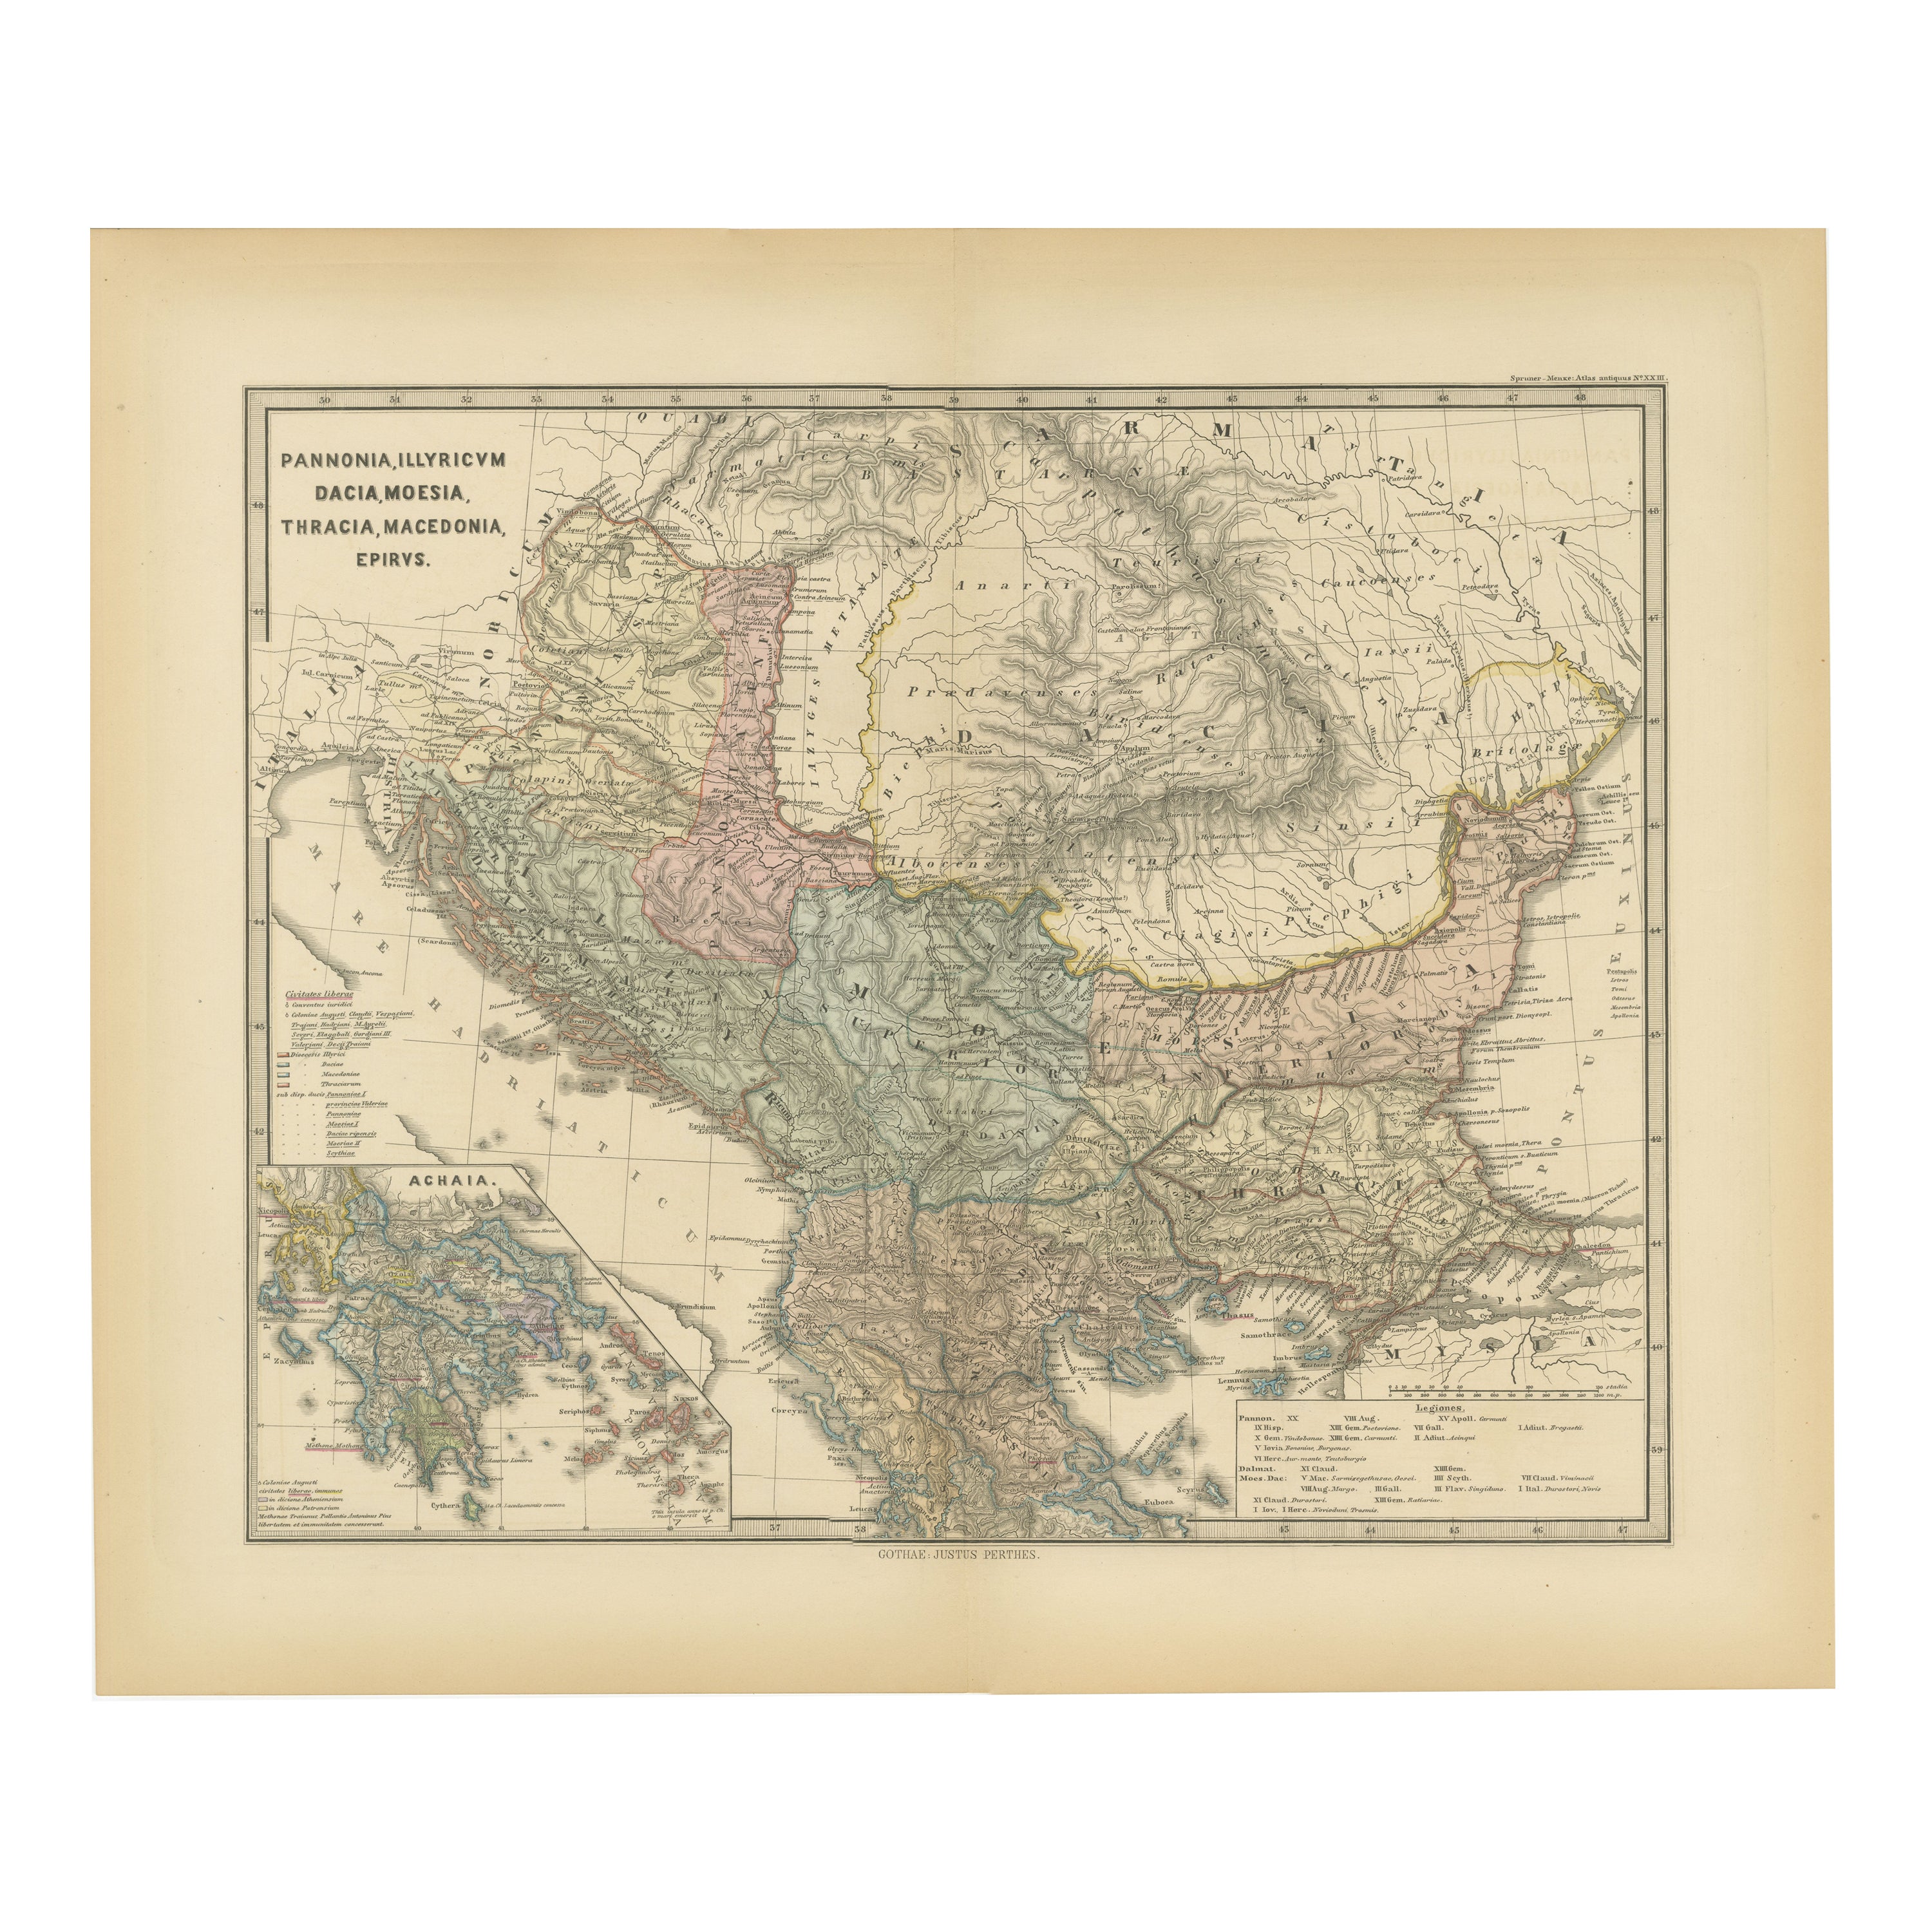 Balkans romains : Pannonia, Illyricum, Dacia, Moesia, Thracia, Macédonie et Thyris en vente